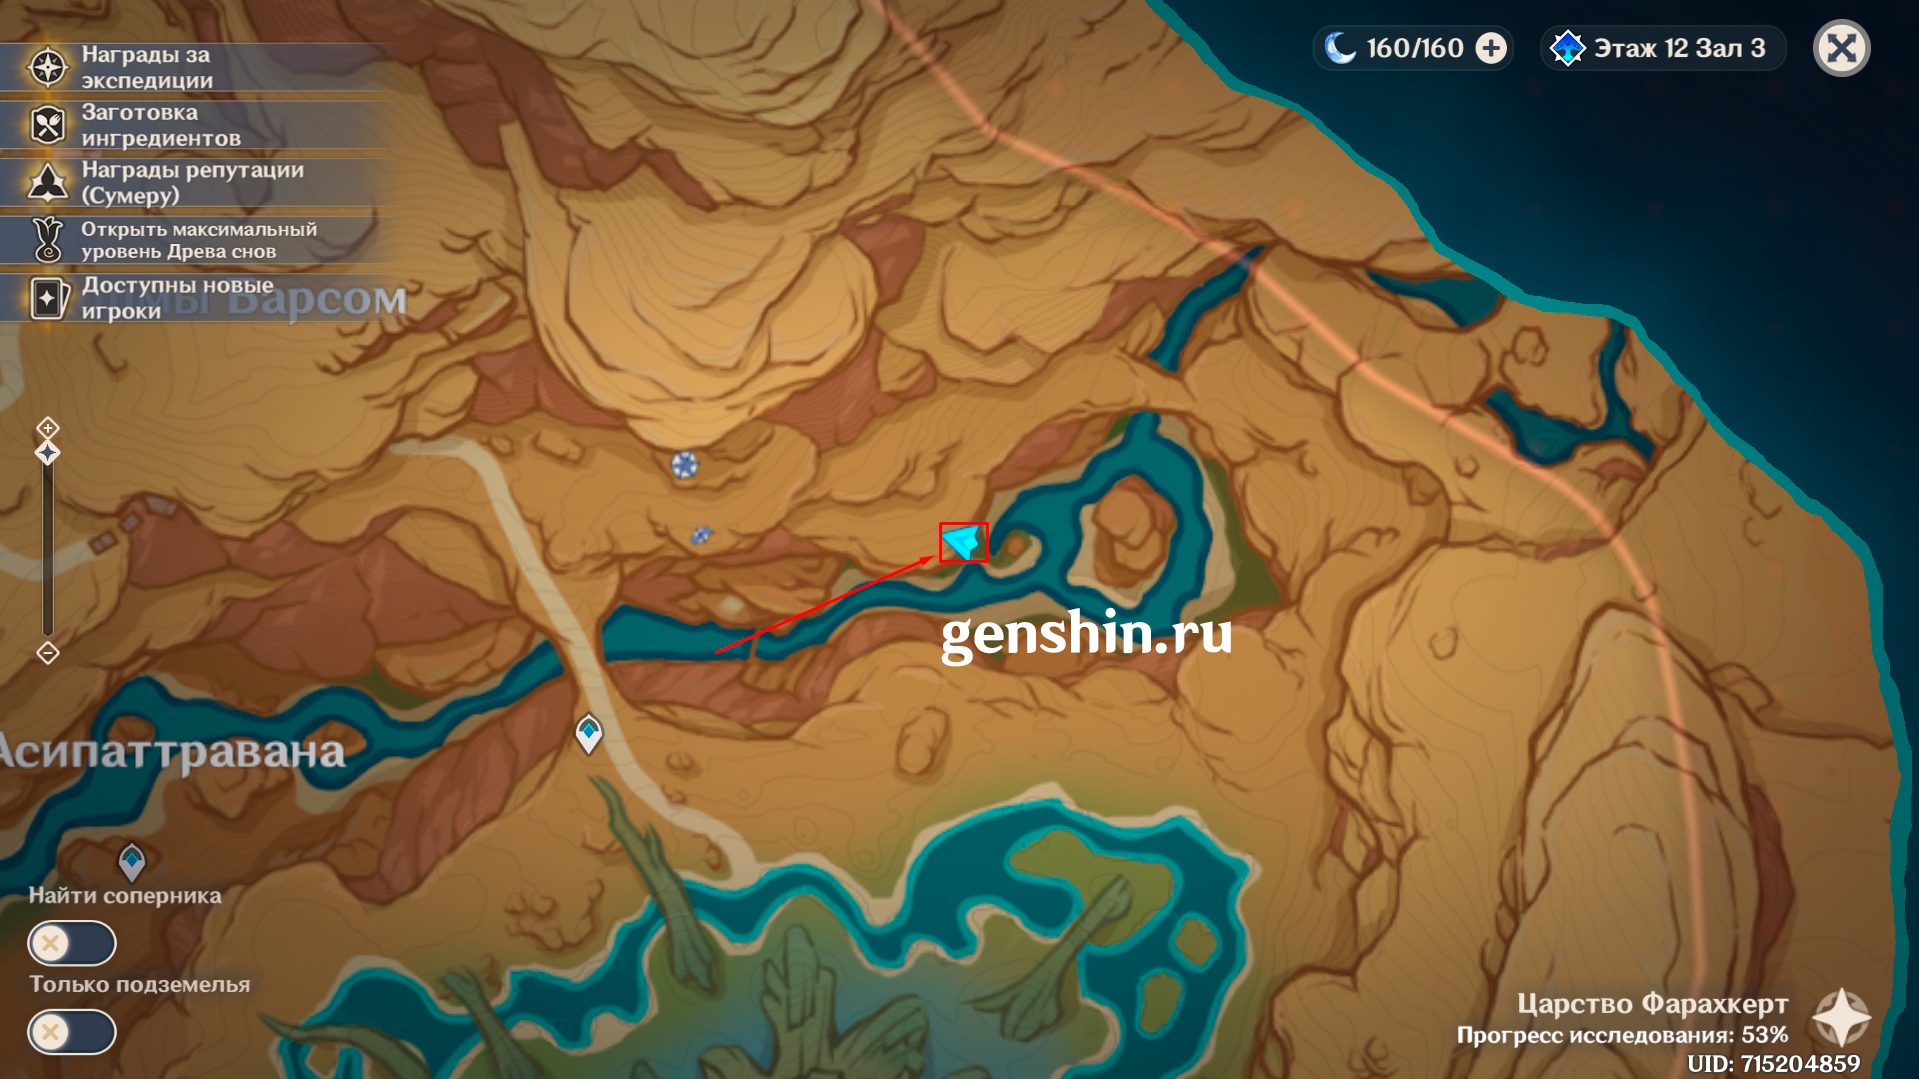 Genshin карта. Болото асипаттравана Геншин цветы скорби. Дедрокулы царство фарахкерт. Геншин карта 1 карта.